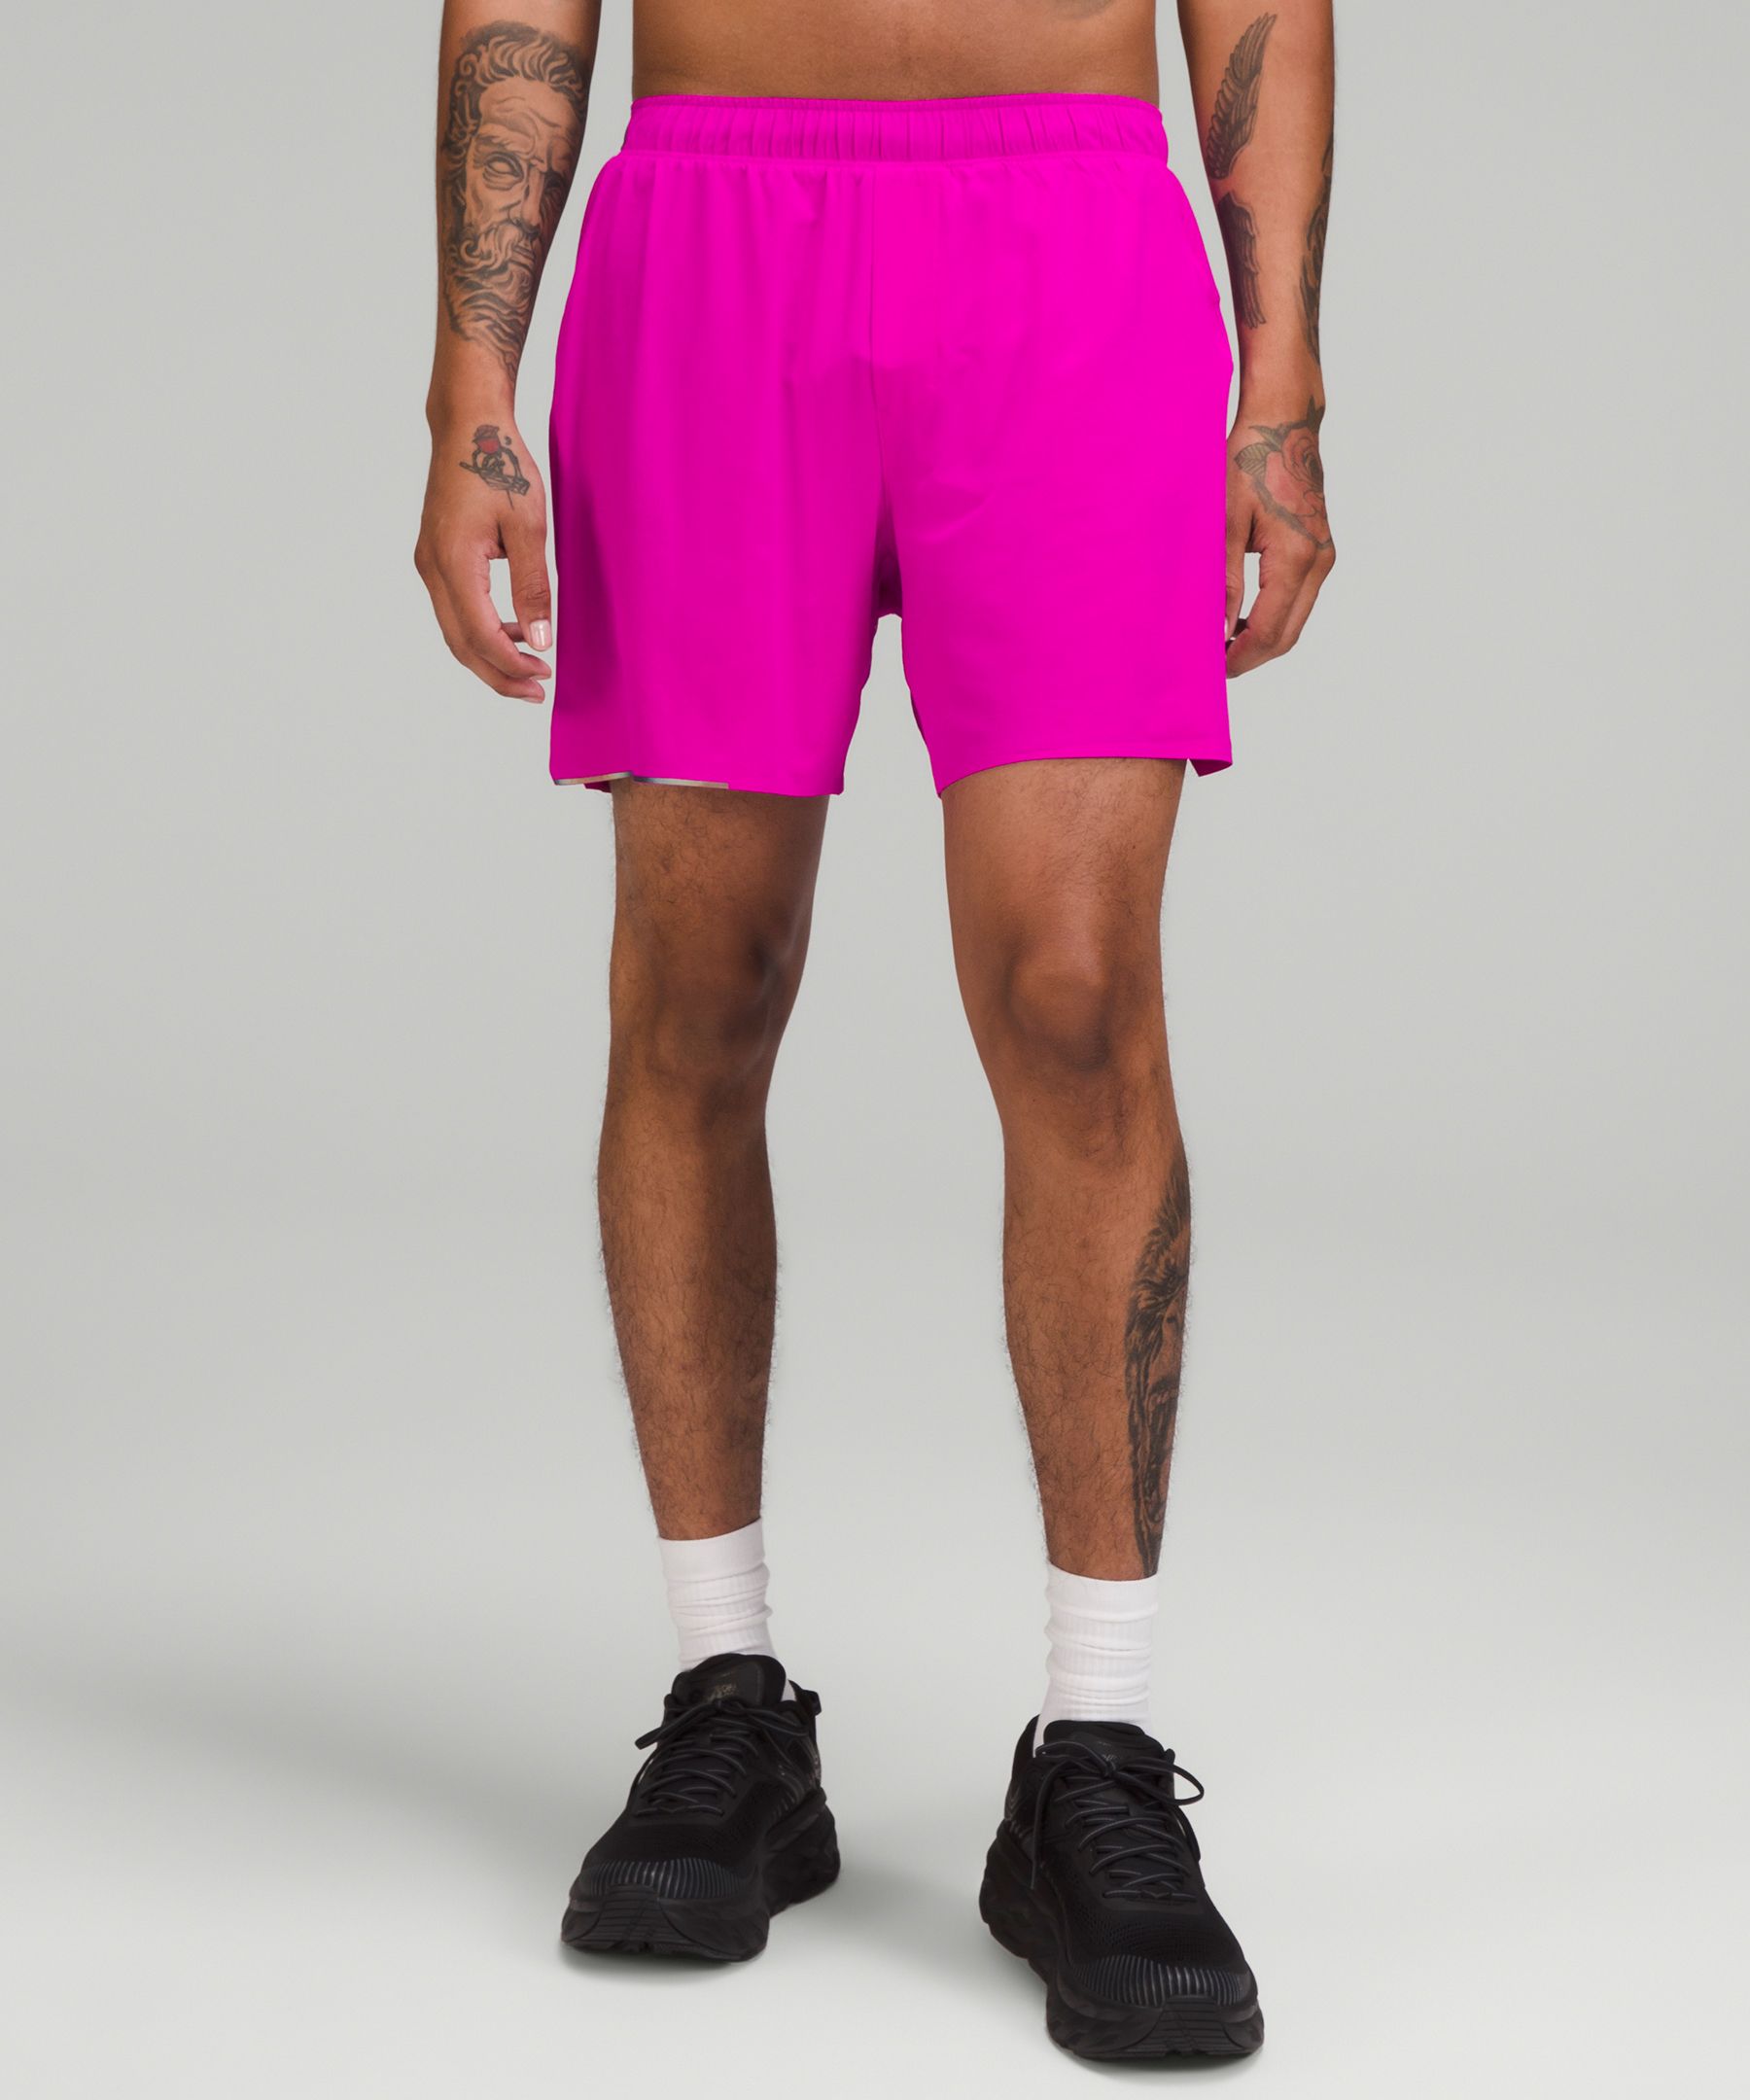 Lululemon Surge Lined Shorts 6" In Purple Highlight